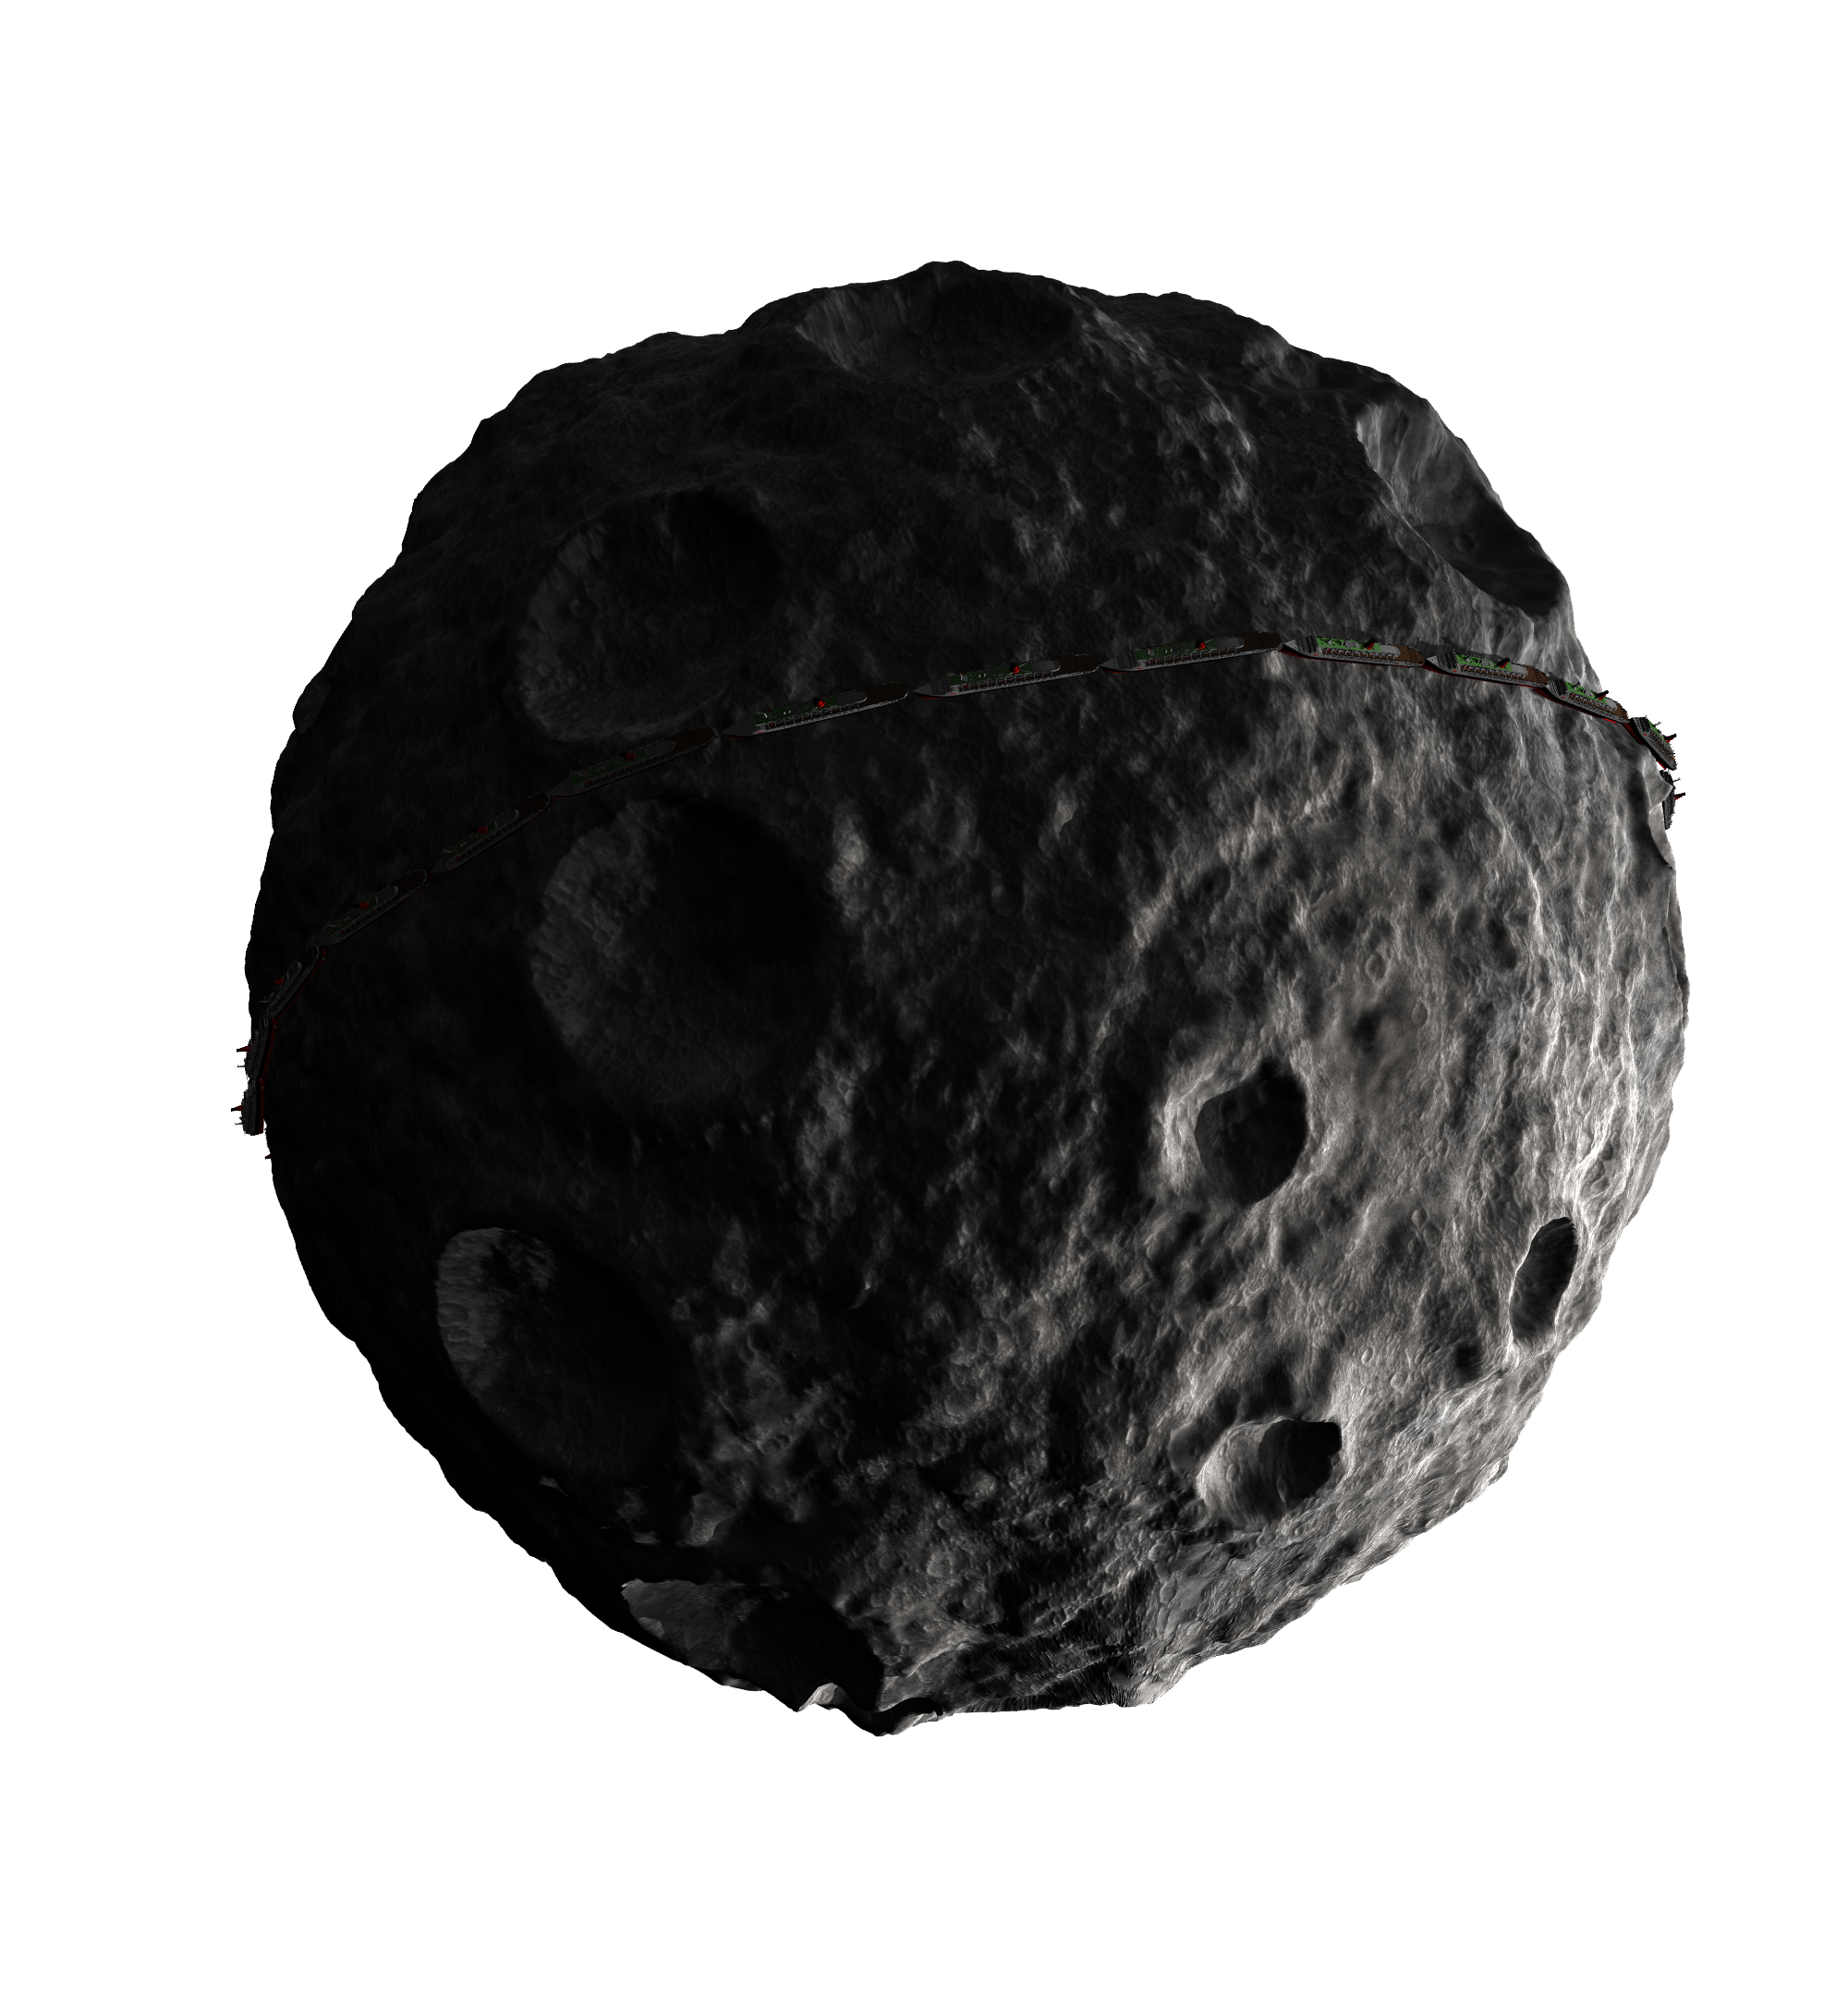 Download PNG image - Asteroid PNG Transparent 